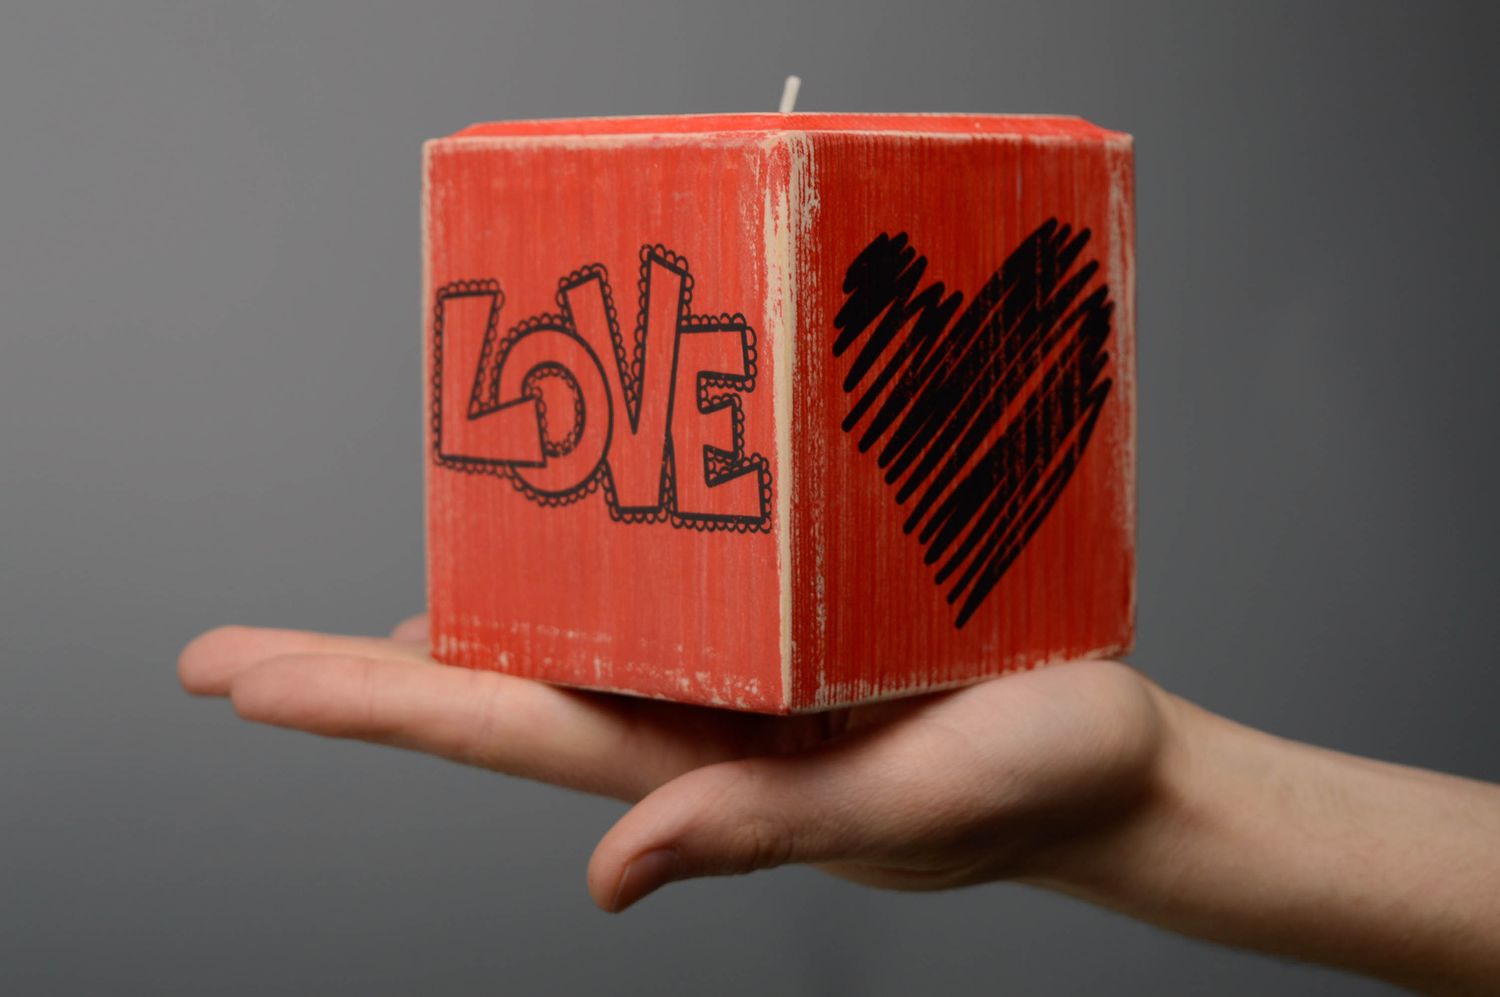 Candelero de madera artesanal Amor foto 3